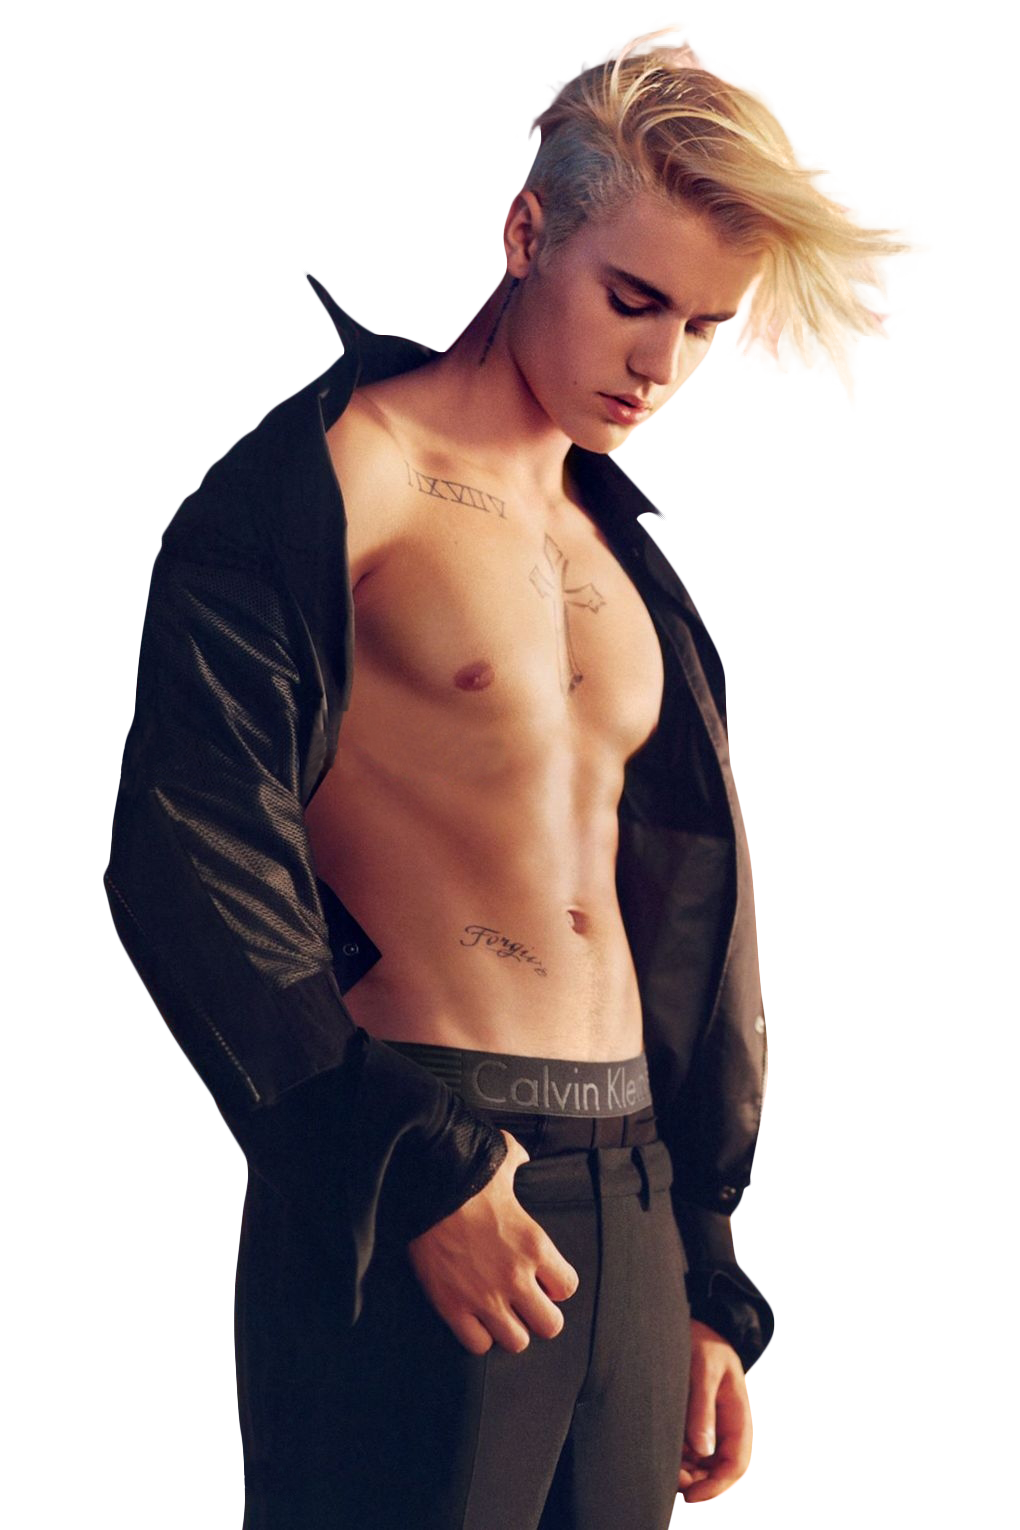 Justin Bieber and Calvin Klein PNG Image - PurePNG | Free transparent